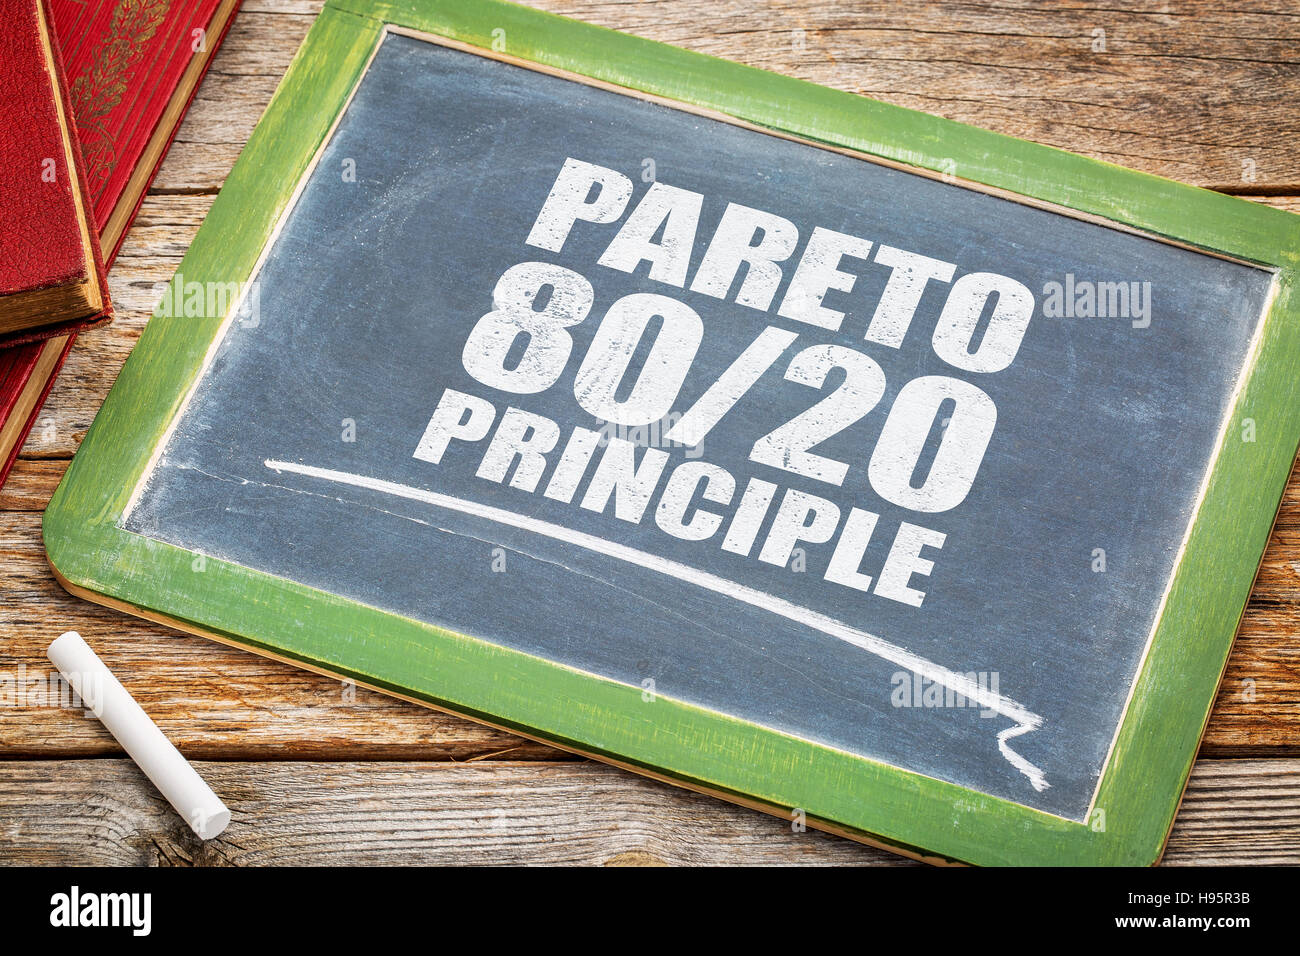 Pareto principle or eighty-twenty rule - white chalk text on a vintage blackboard blackboard with books Stock Photo